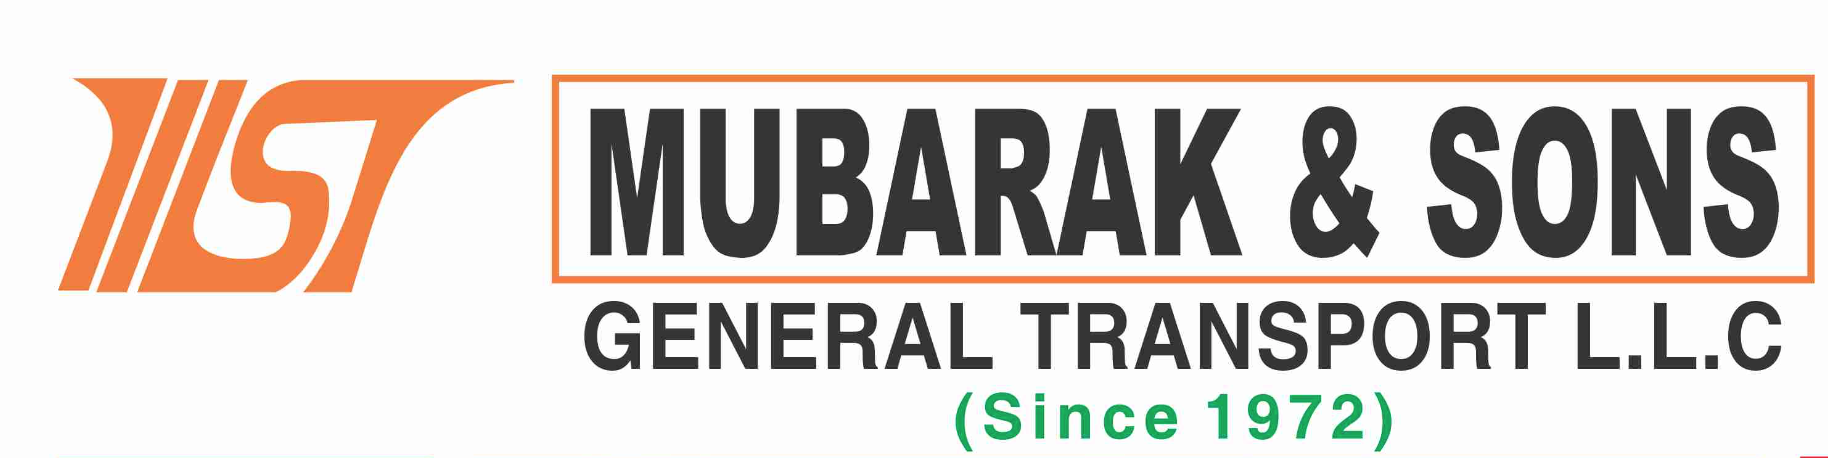 Mubarak & Sons General Transport